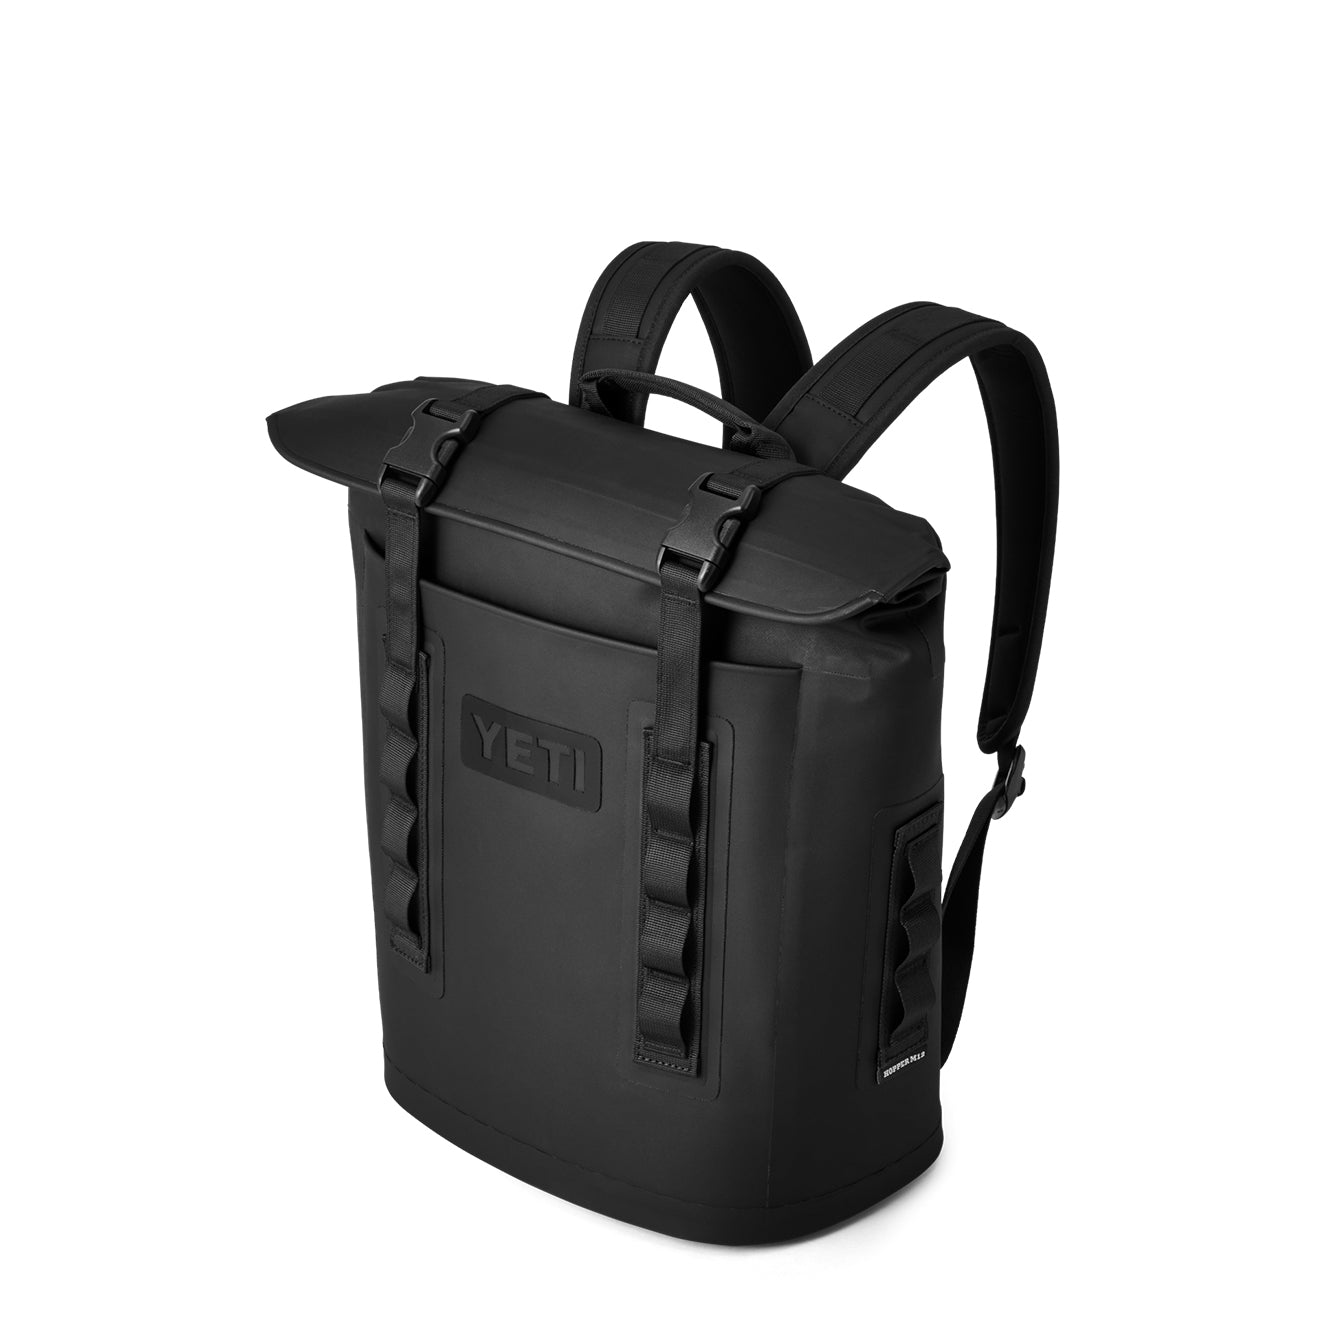 YETI Hopper M12 Soft Backpack Cooler Black | The Sporting Lodge